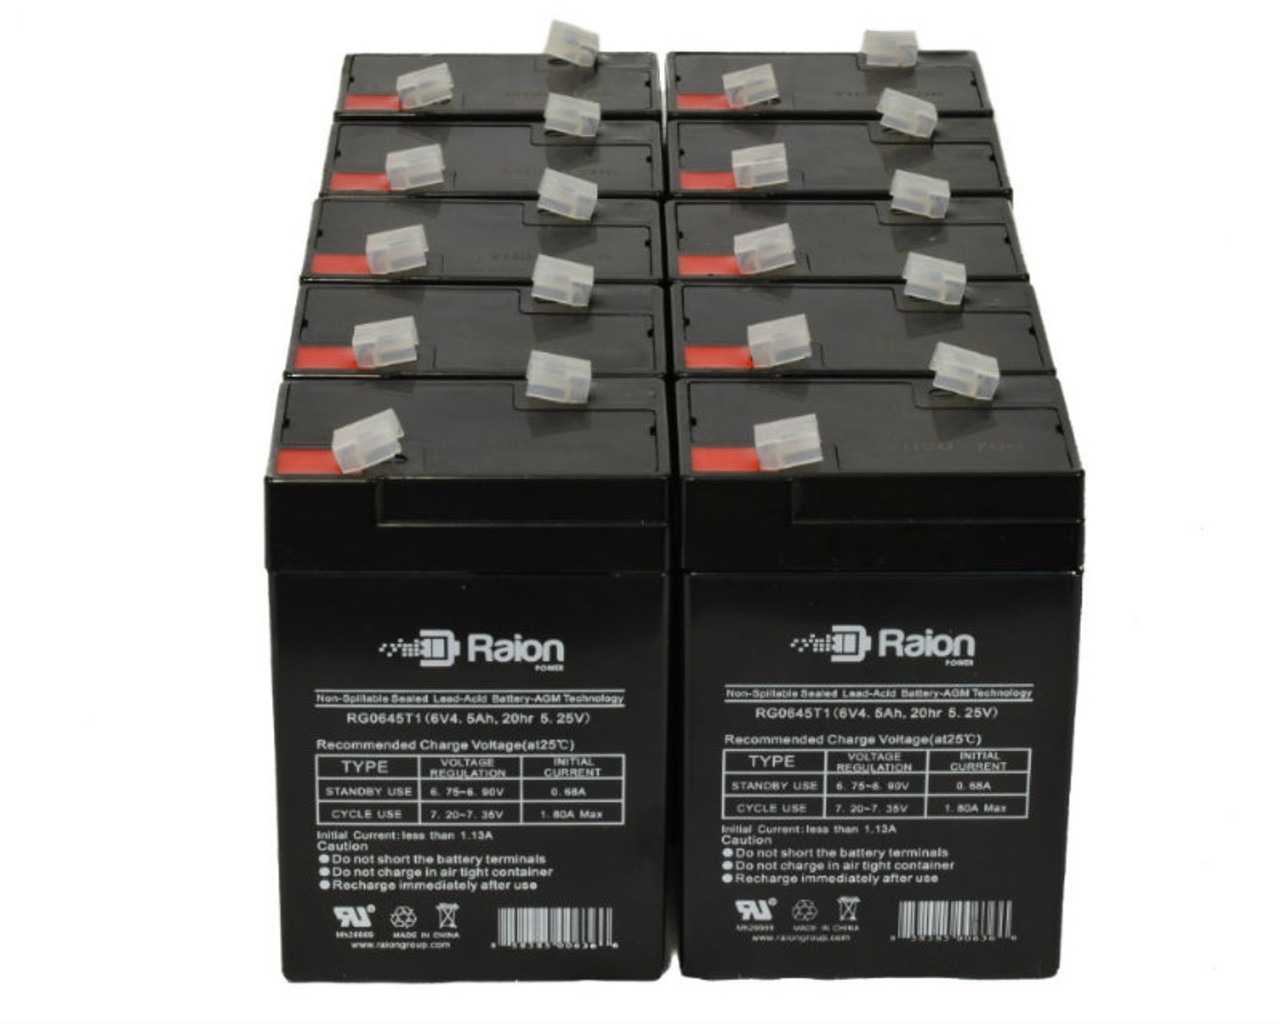 Raion Power 6V 4.5Ah Replacement Emergency Light Battery for Hi-Light 3901 - 10 Pack